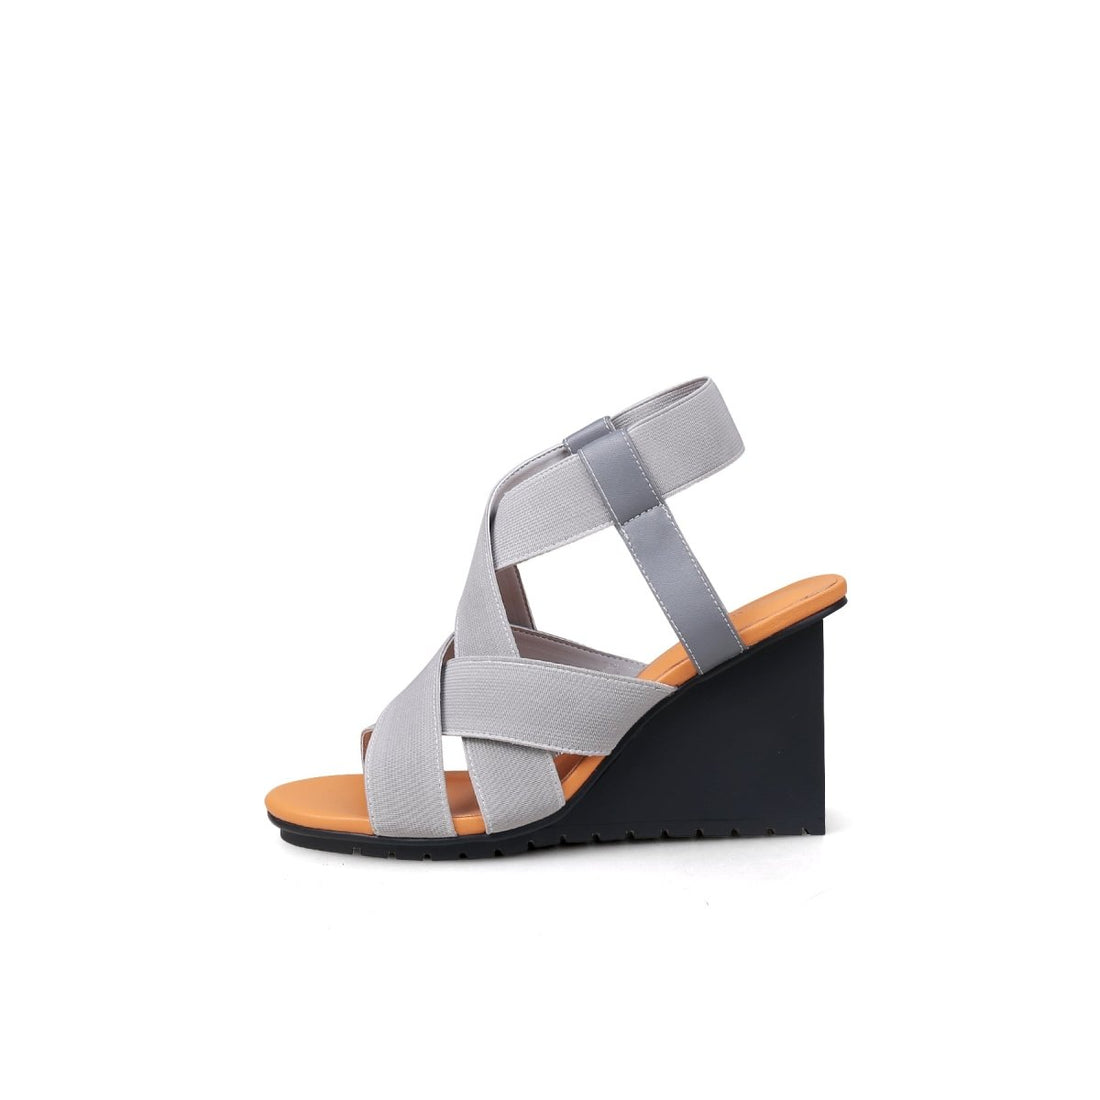 Springy Strappy Grey Wedge-heel Sandals - 0cm